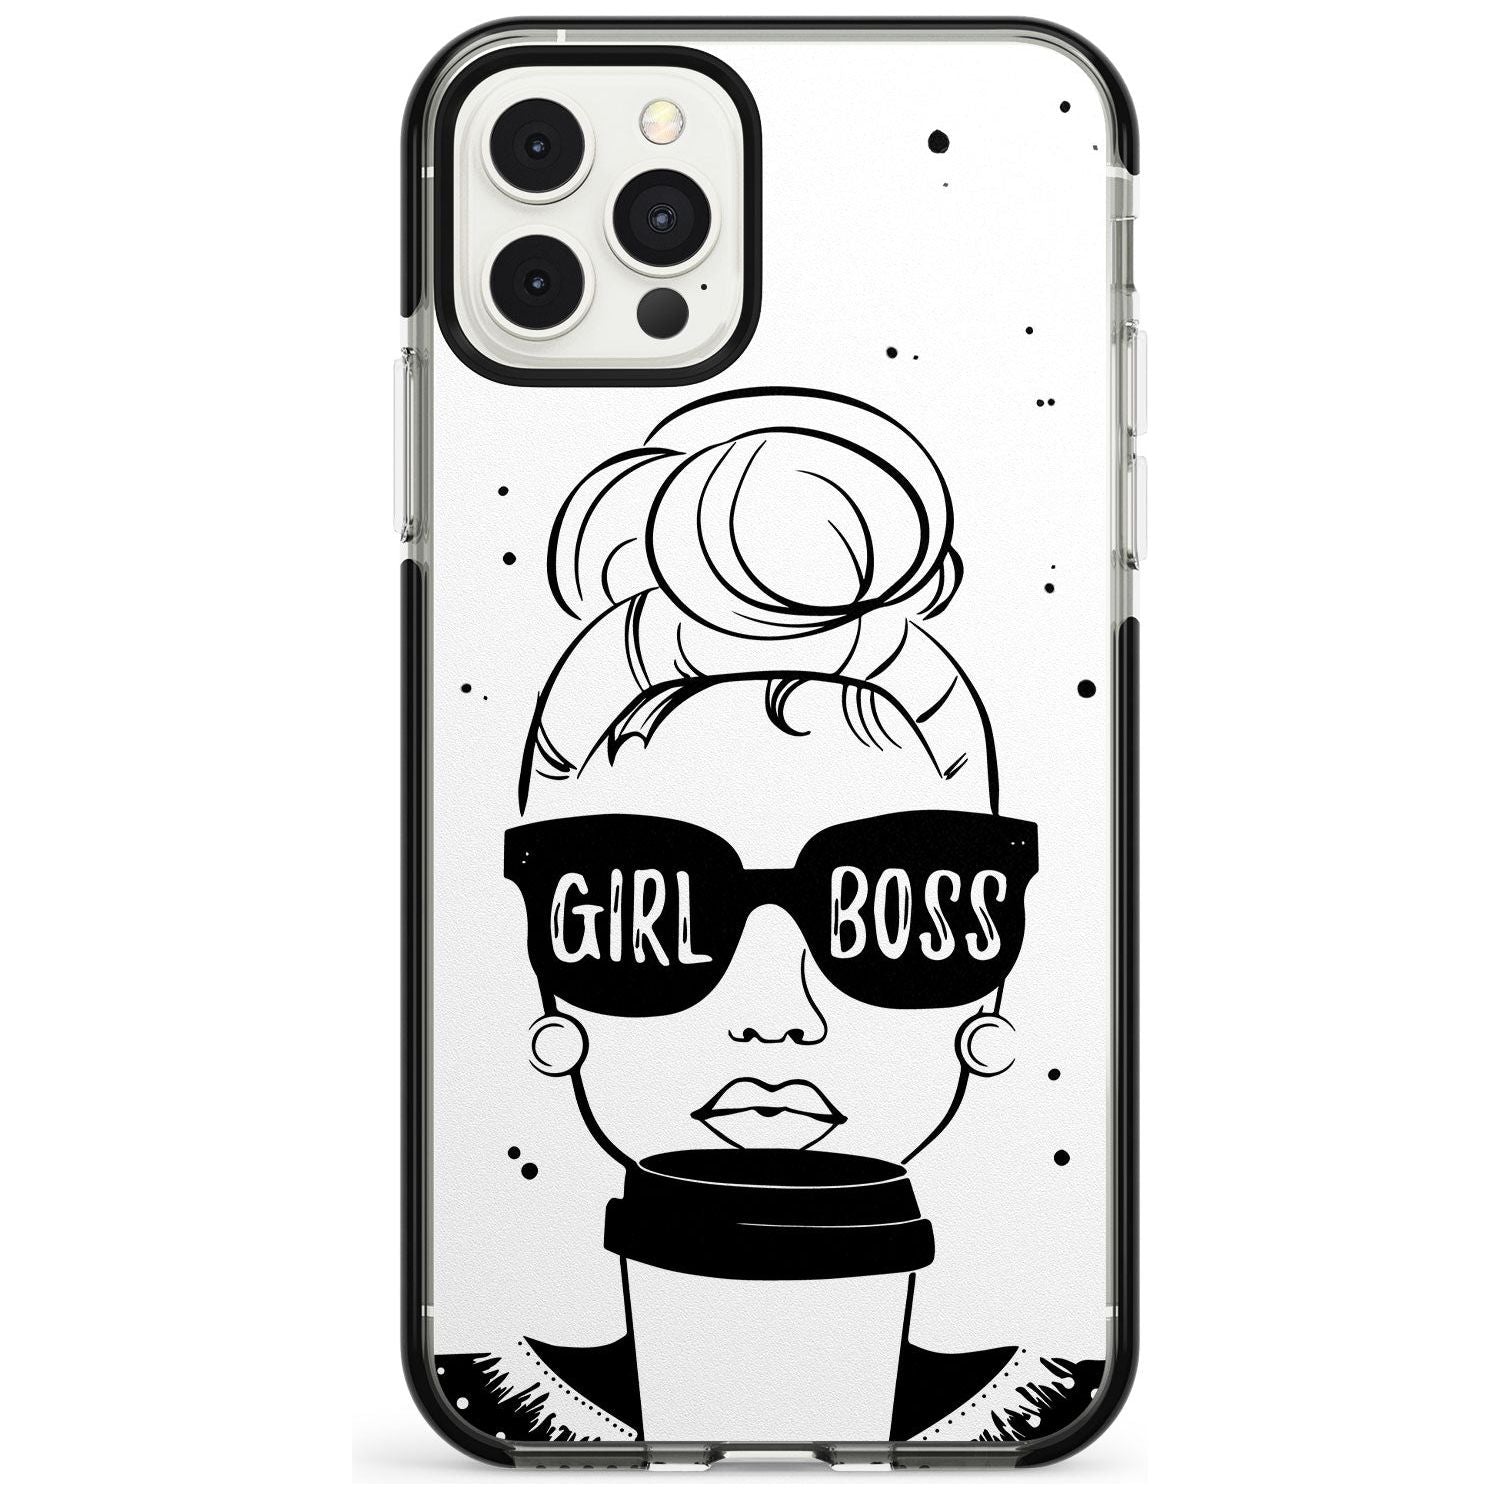 Girl Boss Black Impact Phone Case for iPhone 11